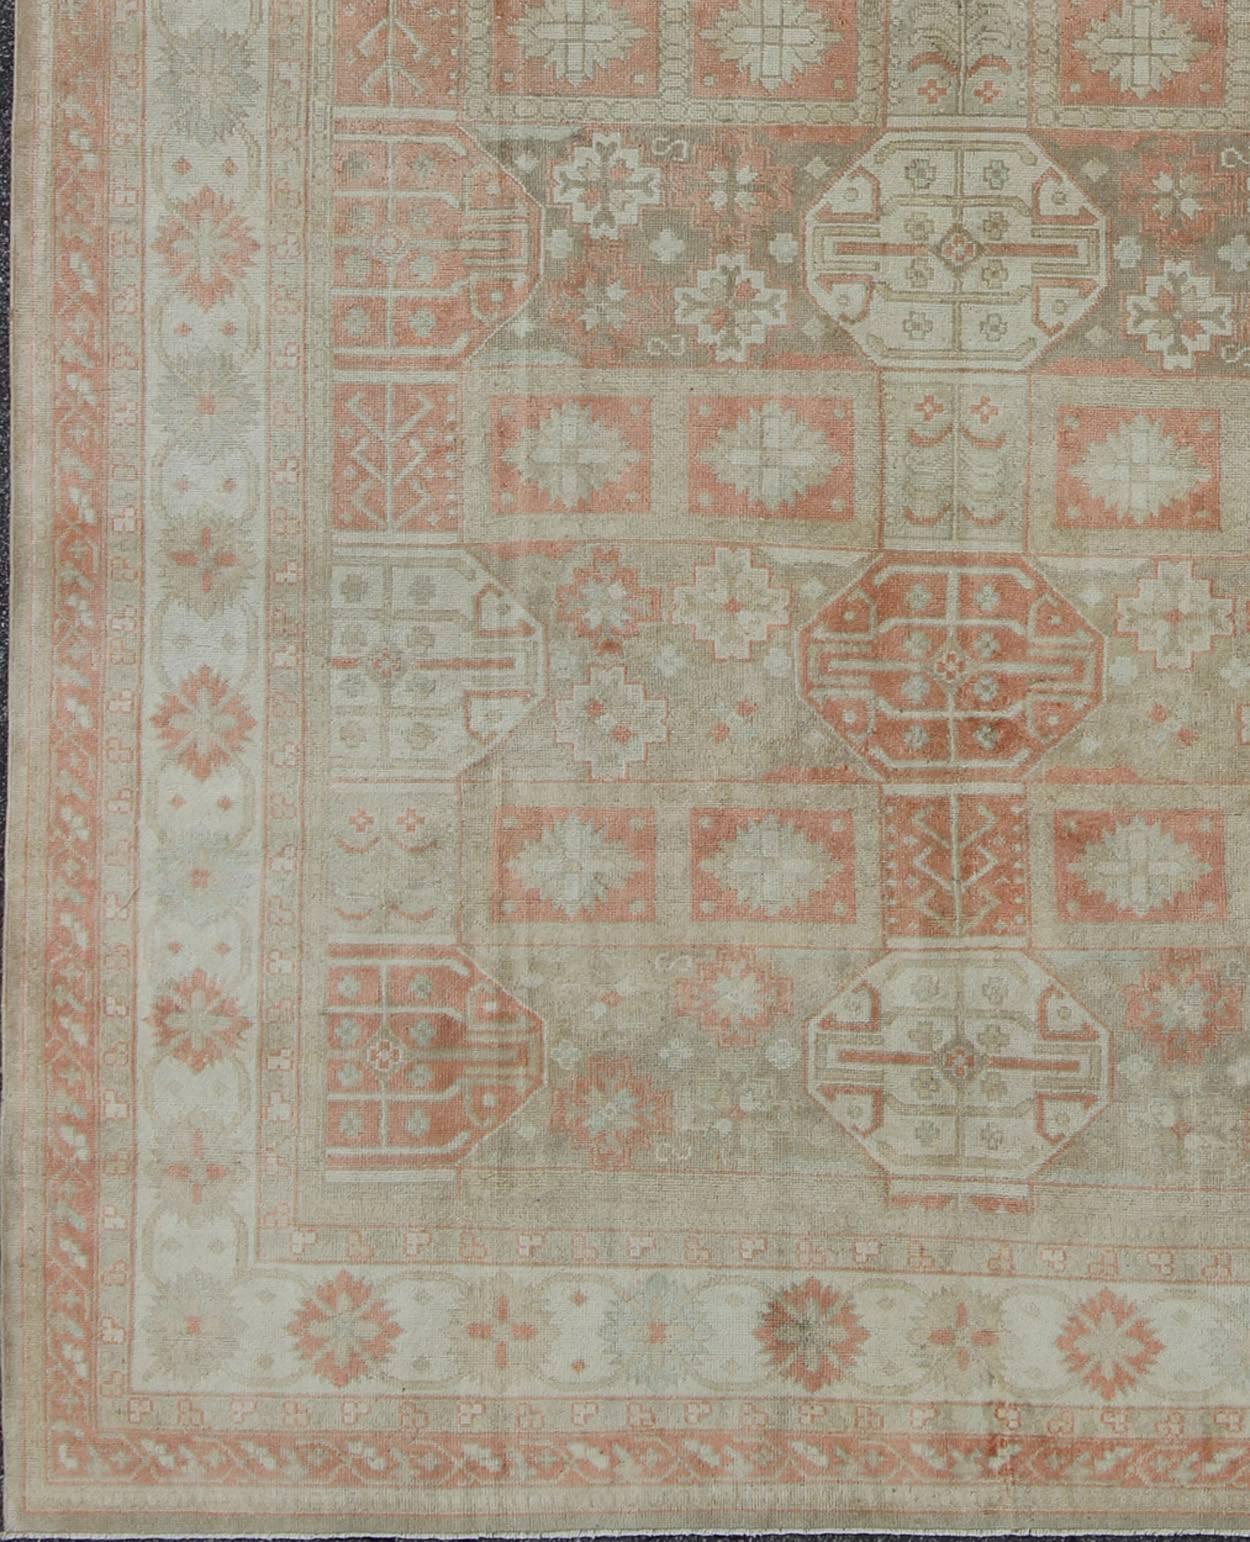 Vintage Turkish Khotan Rug with Sub-Geometric Grid Design and Detailed Borders, rug tu-mtu-3747, country of origin / type: Turkey / Khotan, circa 1950

This stunning vintage Turkish Oushak carpet (circa mid-20th century) features an alternating grid